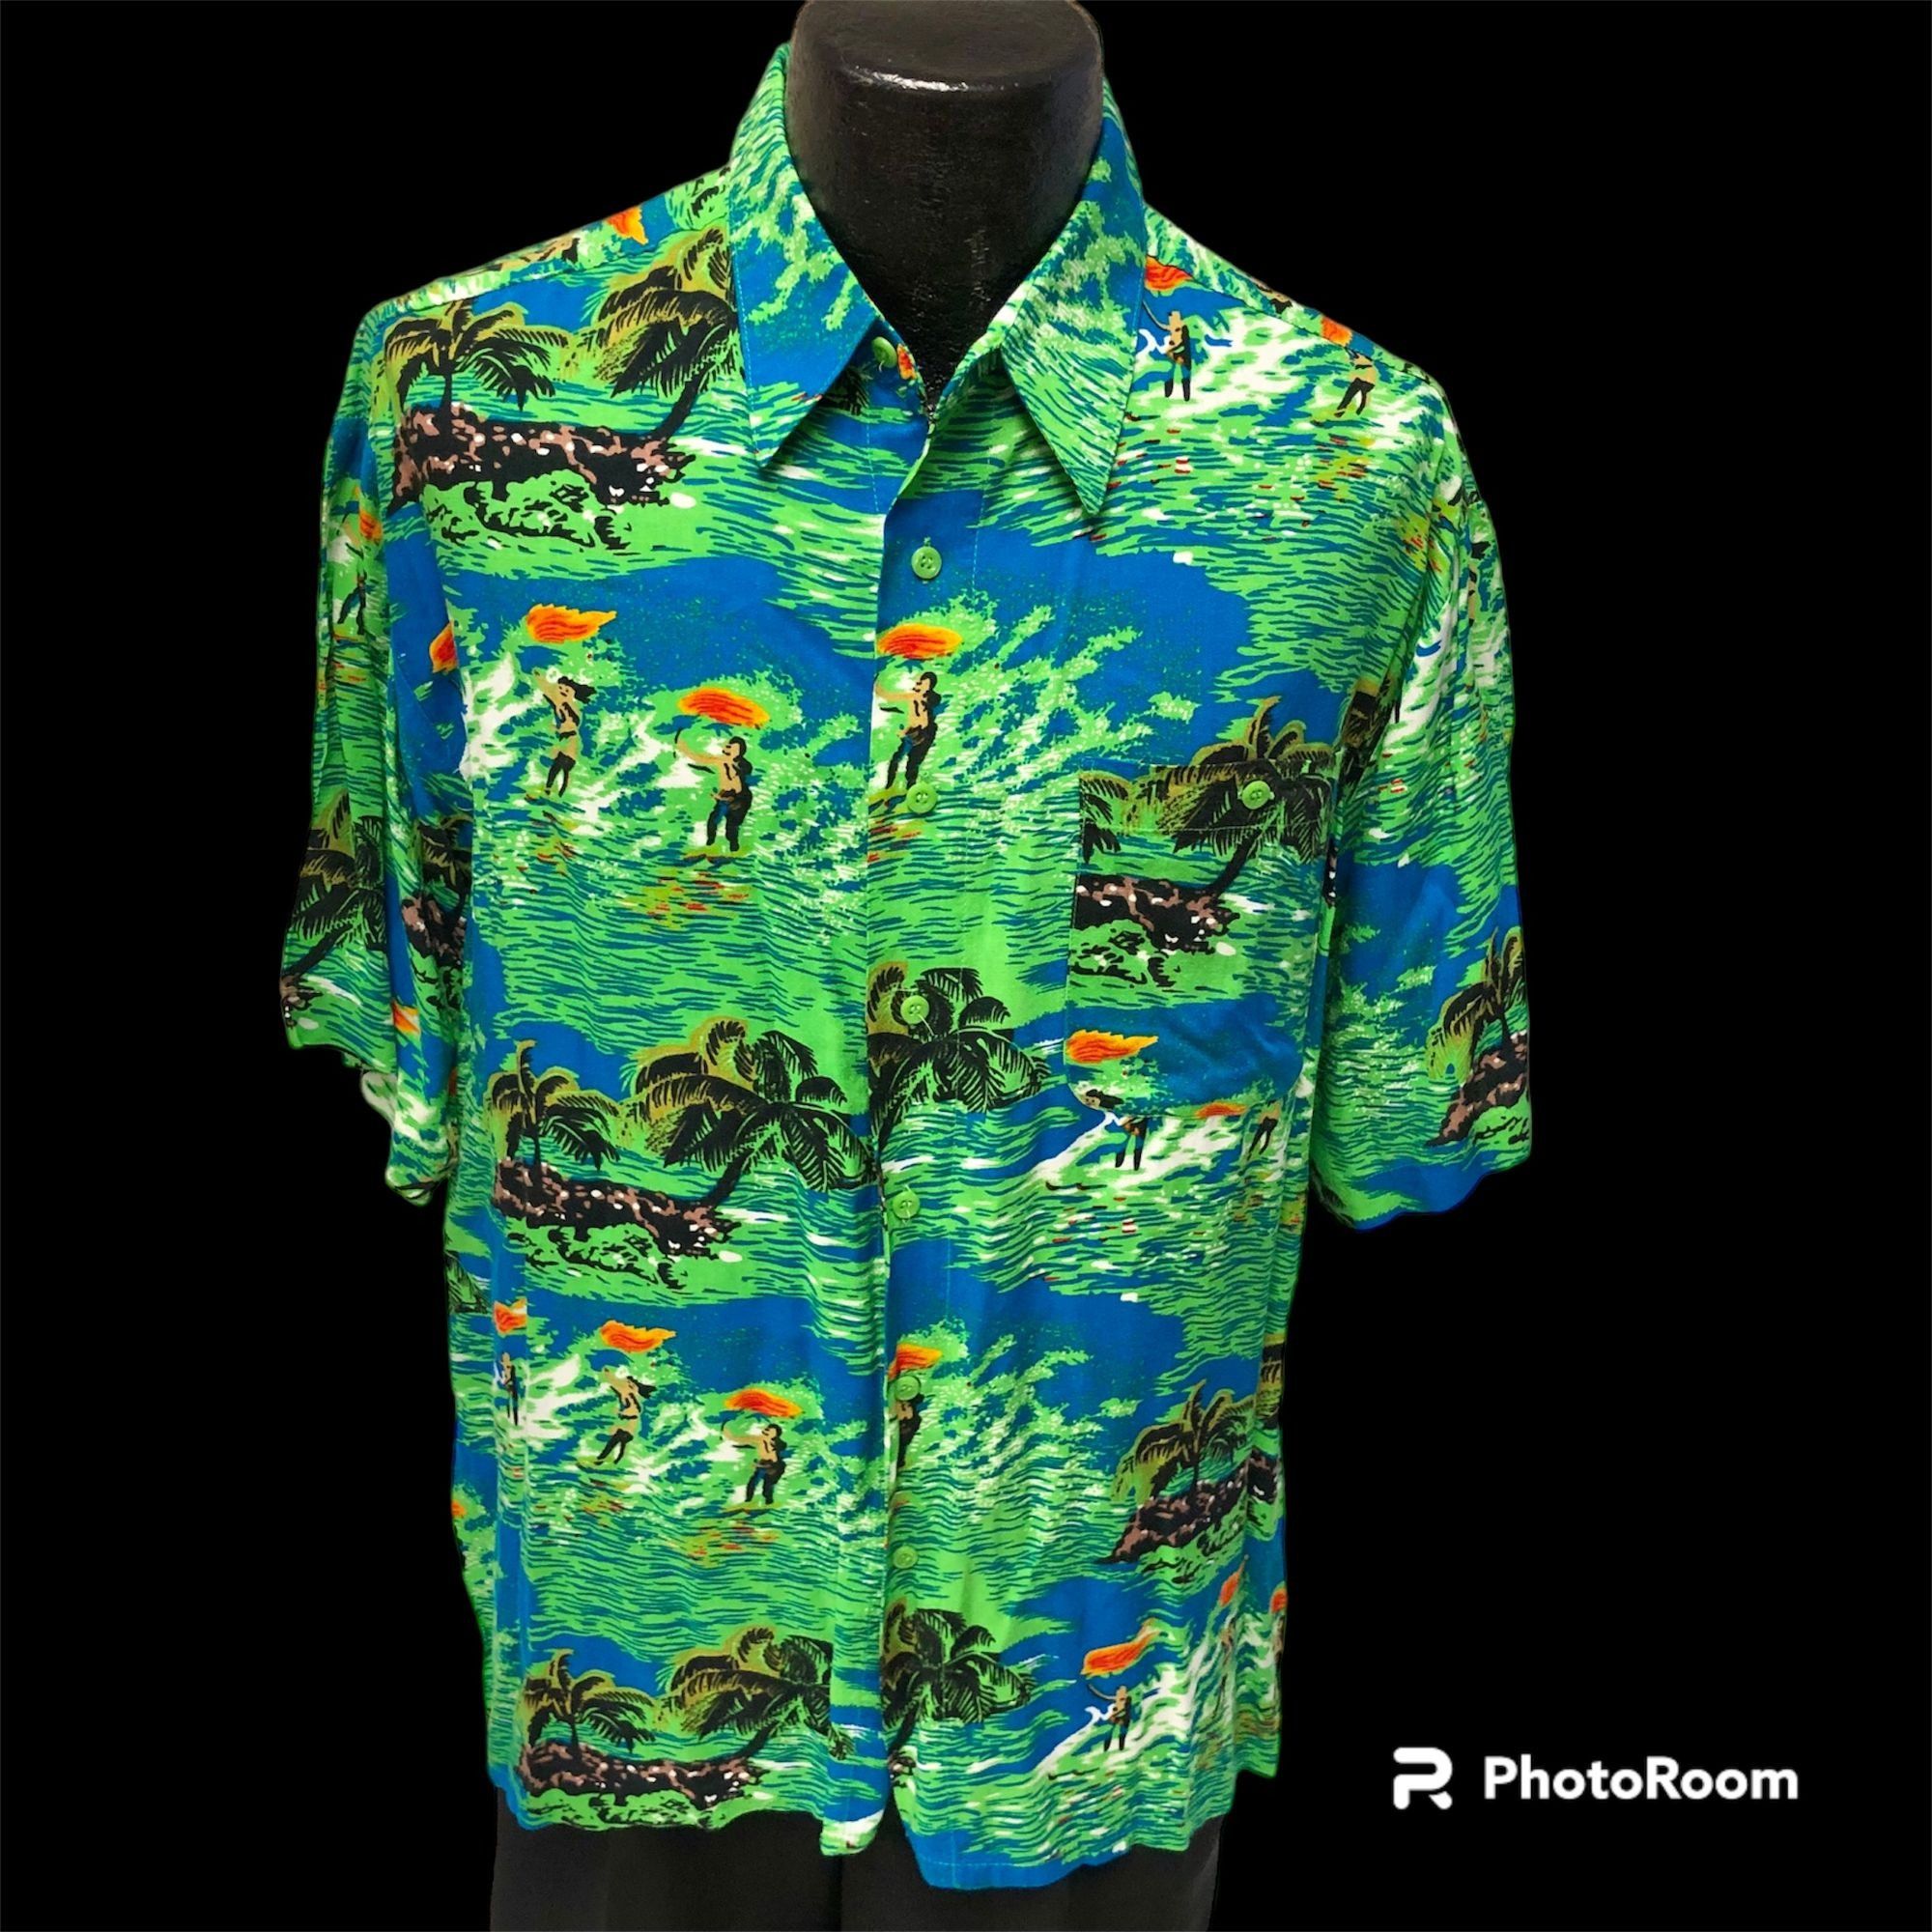 Unkwn 80's Rayon FIRE THROWING Hawaiian SAVAGES Island Shirt XL Size US XL / EU 56 / 4 - 2 Preview